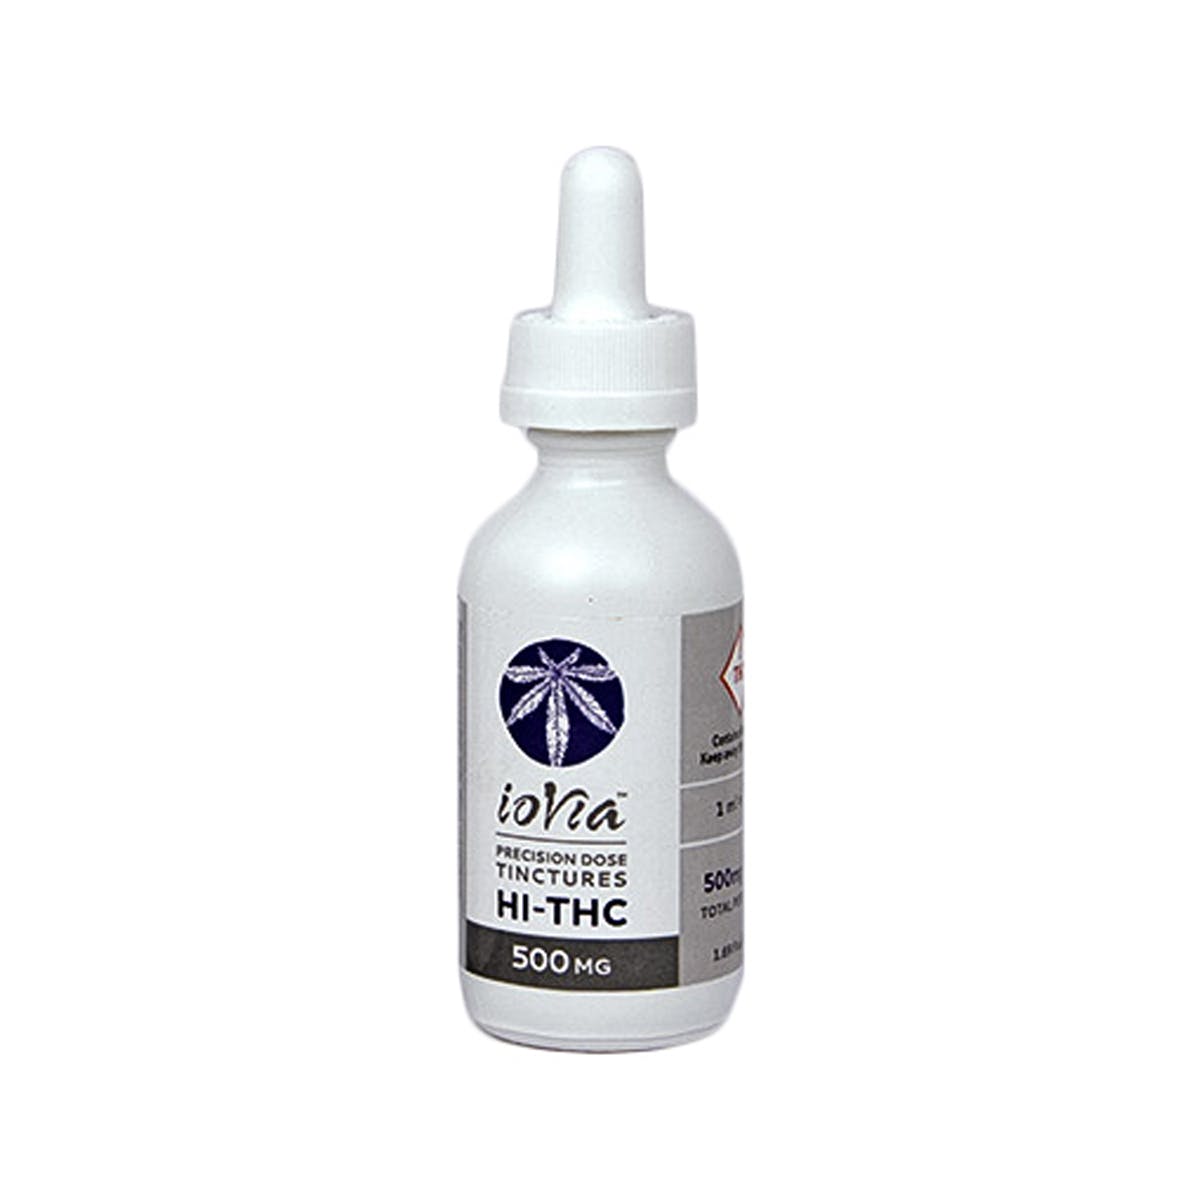 (Med) ioVia Tincture 500mg HI-THC Precision Dose